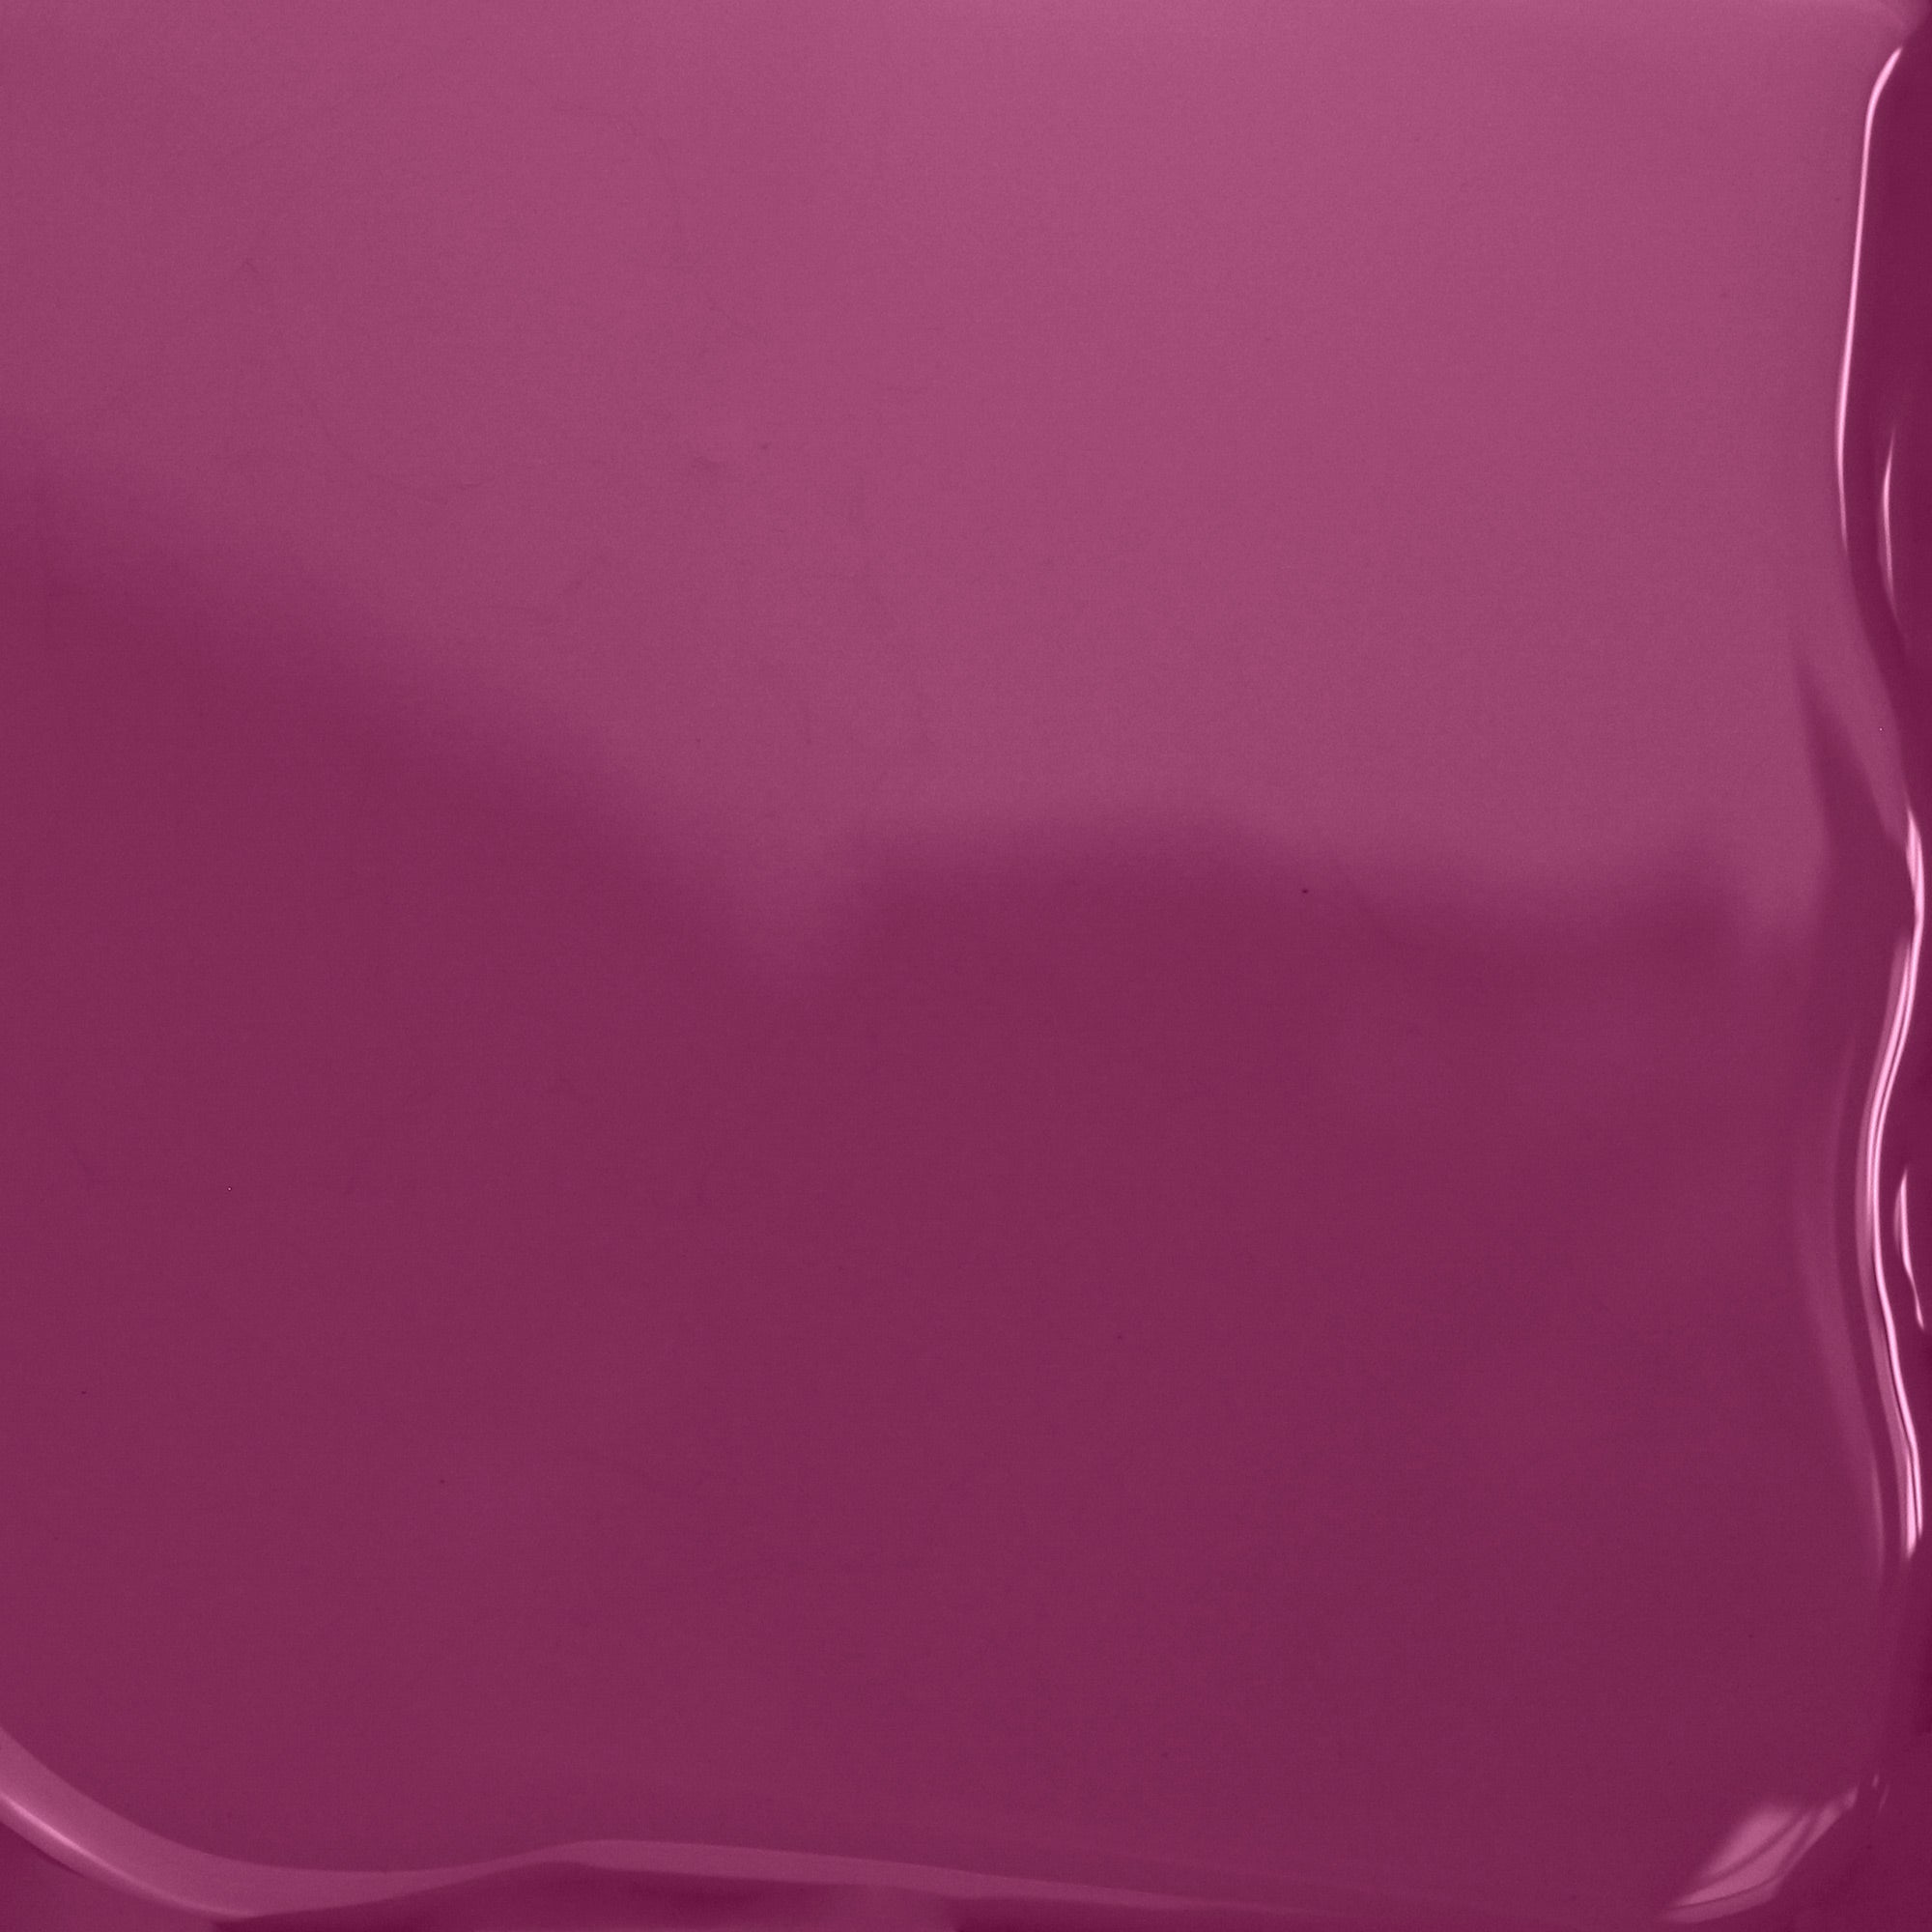 BKIND Aries bright and vibrant purple vegan 21-free